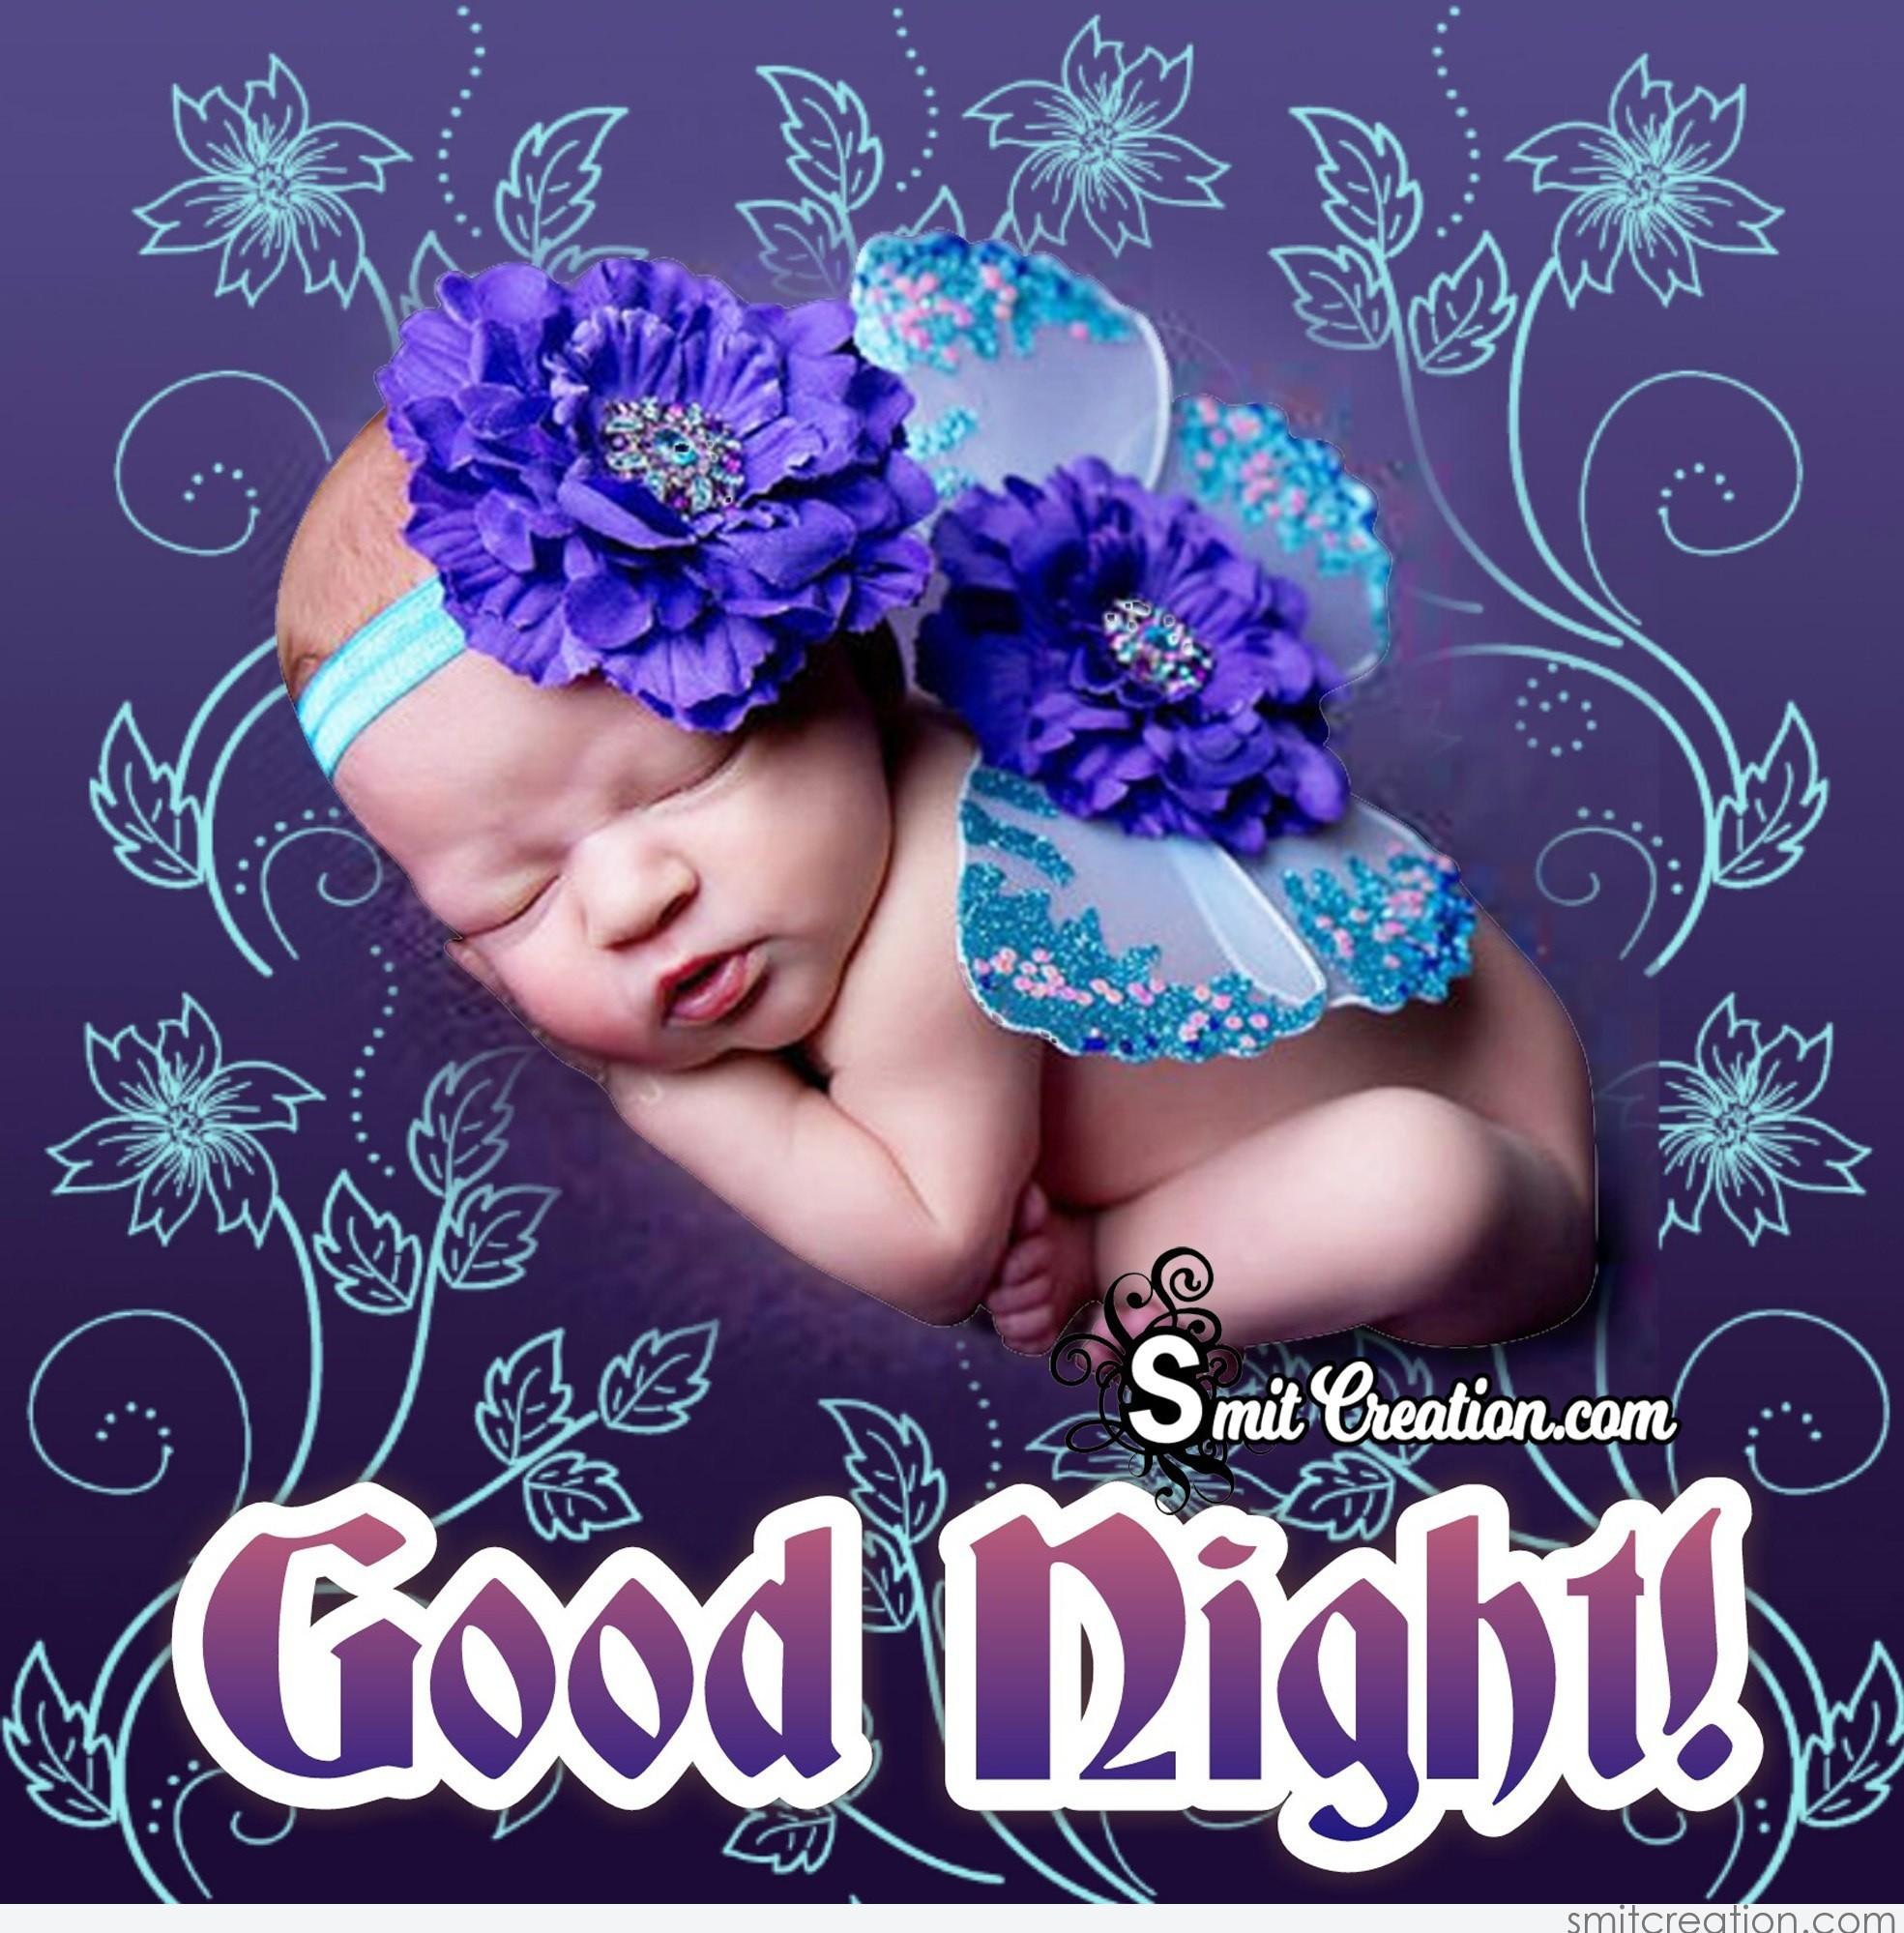 Good Night Beautiful Baby Image - SmitCreation.com